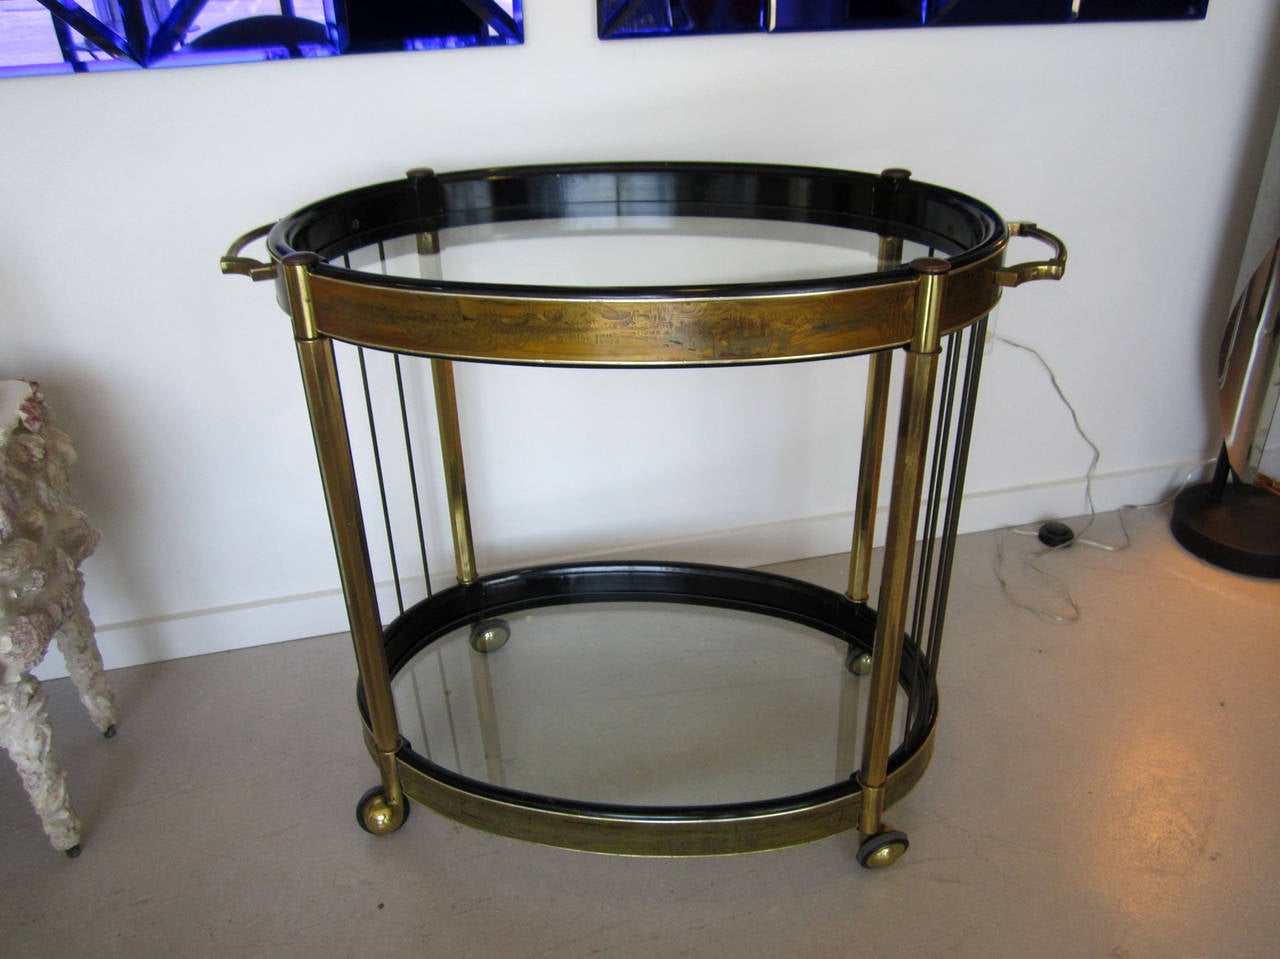 Brass oval bar cart by Bernhard Rohne for Mastercraft.